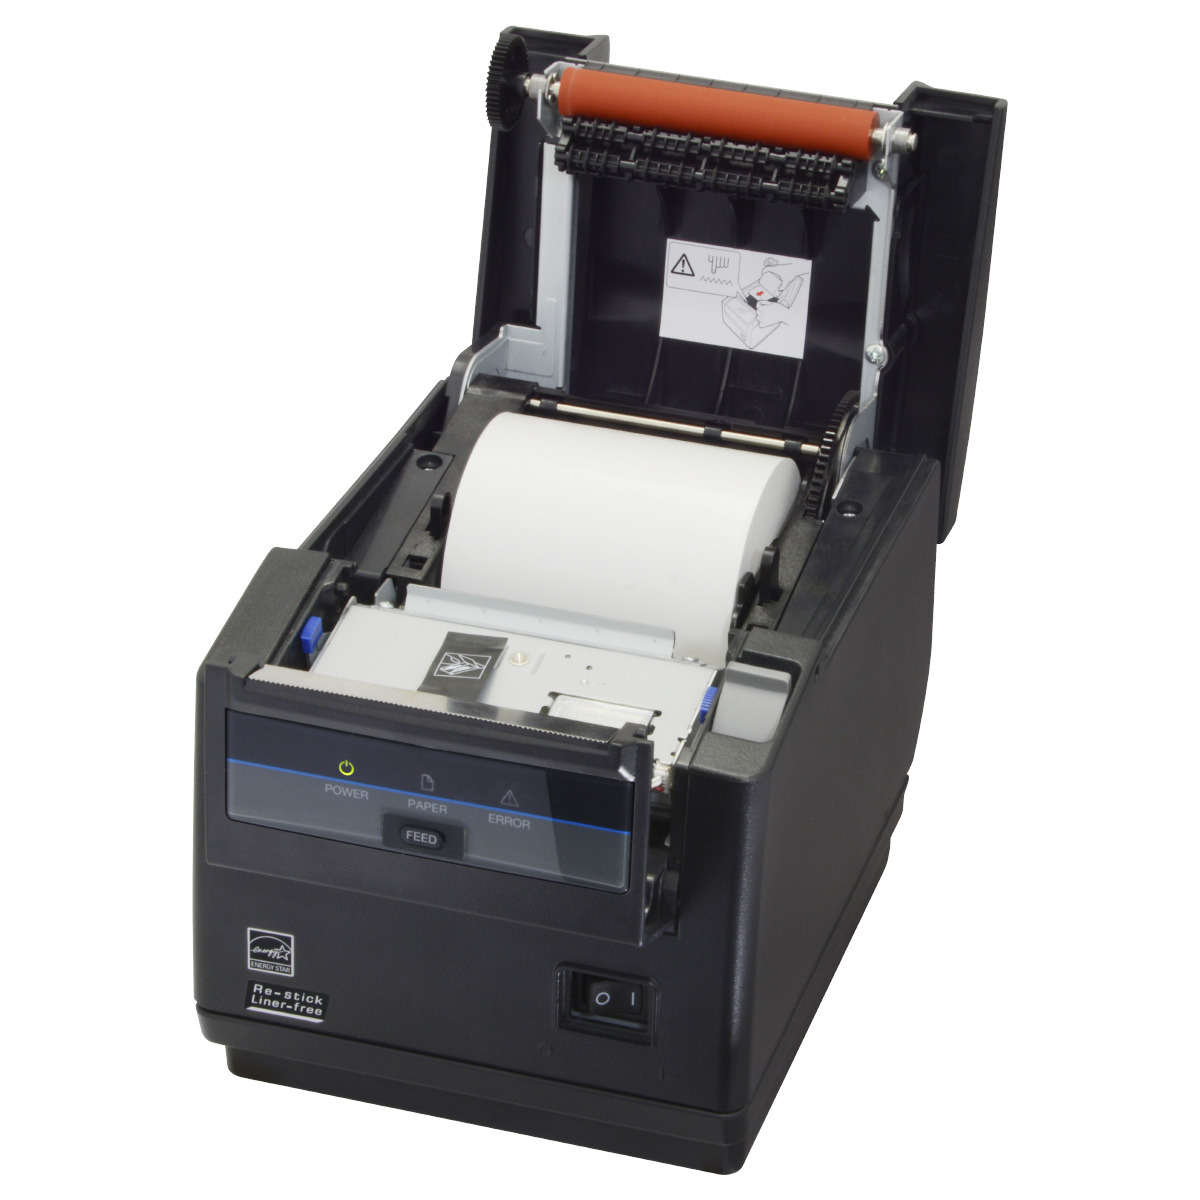 80mm Liner-Free Label Printer Paper (6 rolls)